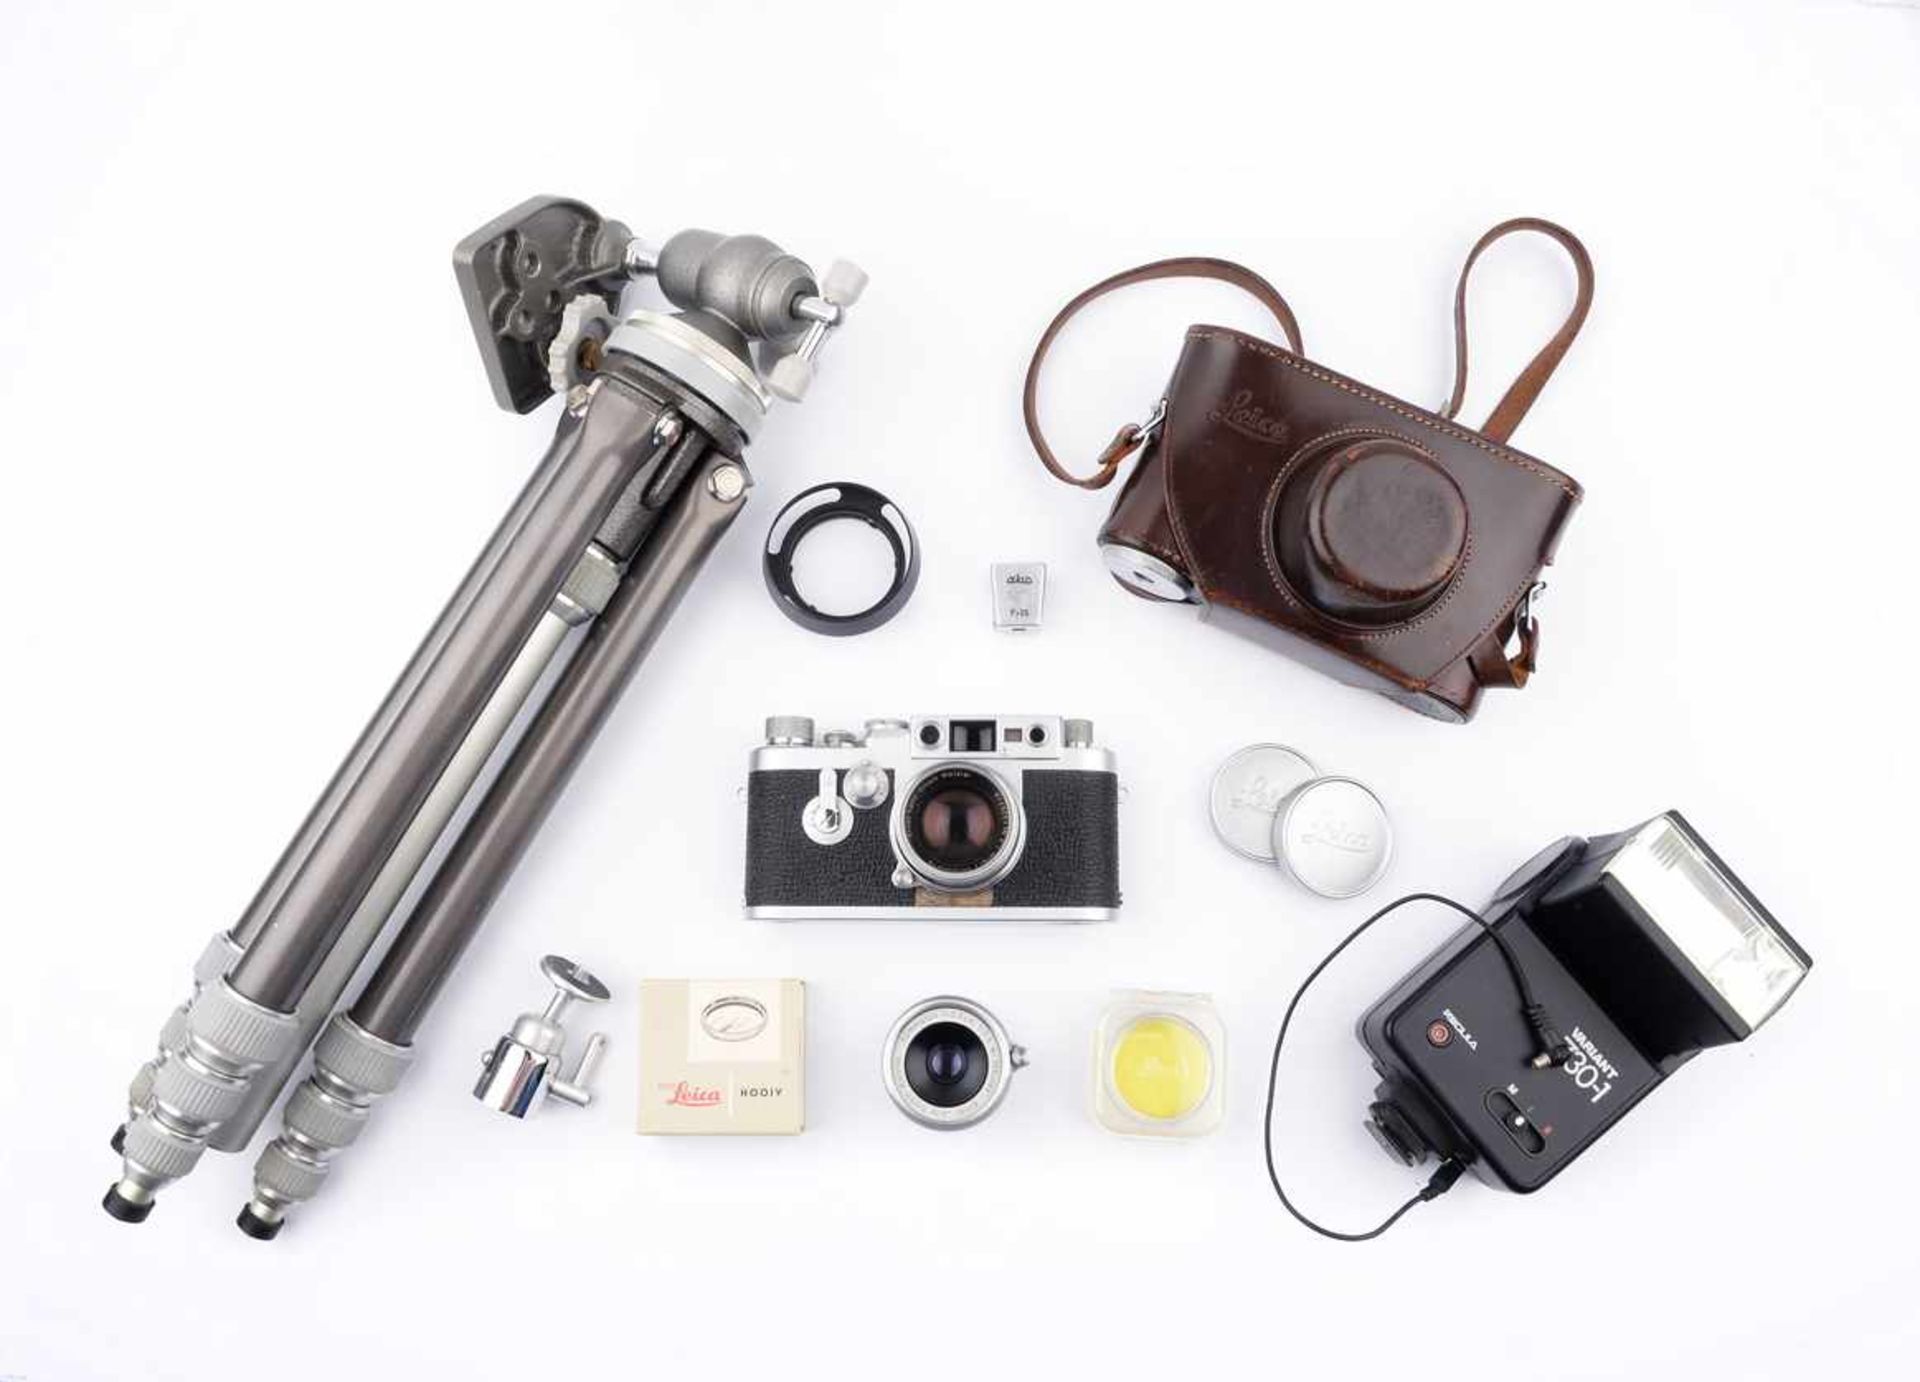 Leica IIIG / Leica 3G, Chromgehäuse.Baujahr 1957-60, Seriennummer 969147. 2 Objektive Leitz